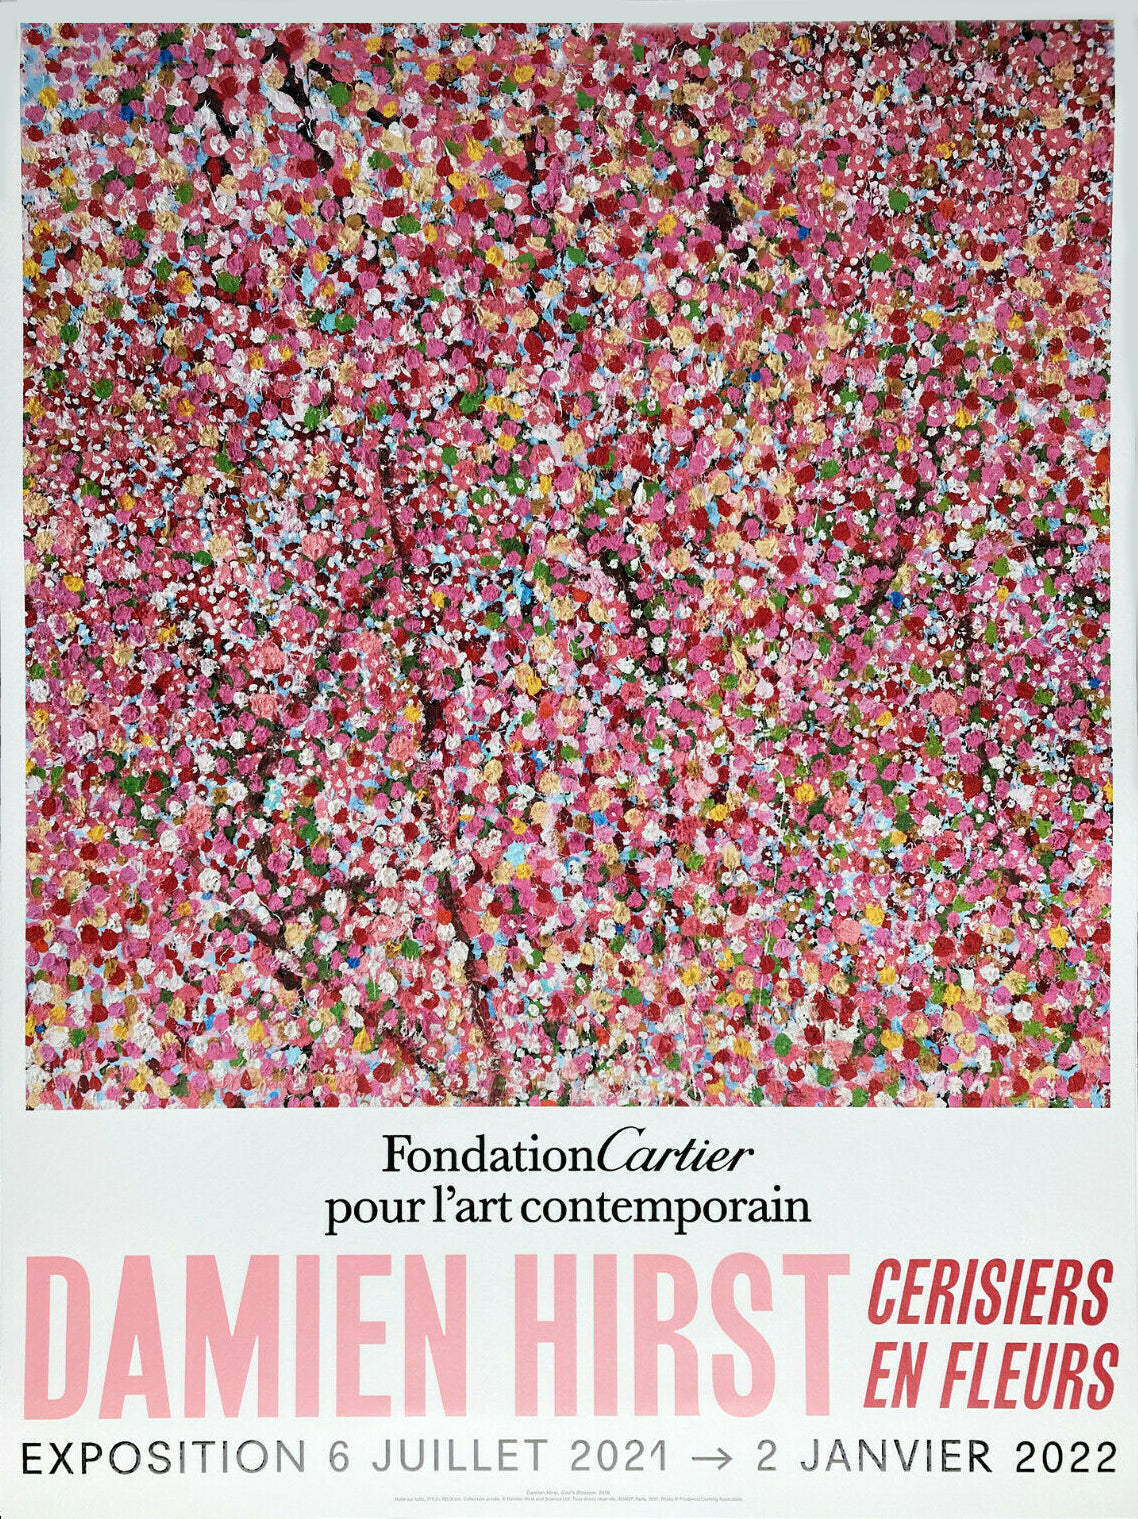 Damien Hirst - Cherry Blossom - Fondation Cartier Paris ©, Original exhibition poster 6/6